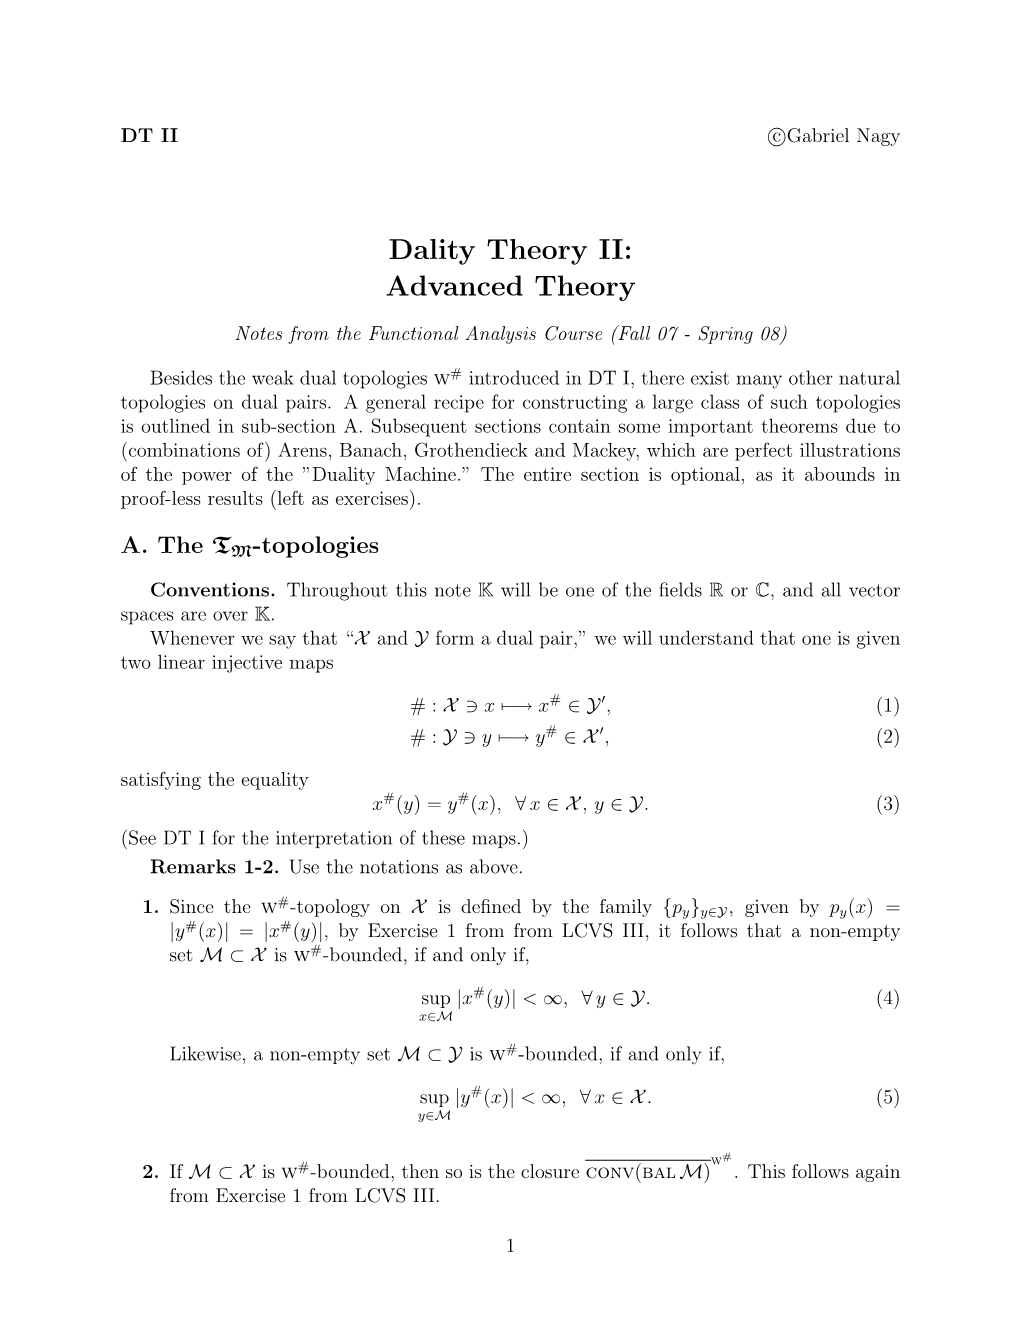 Dality Theory II: Advanced Theory